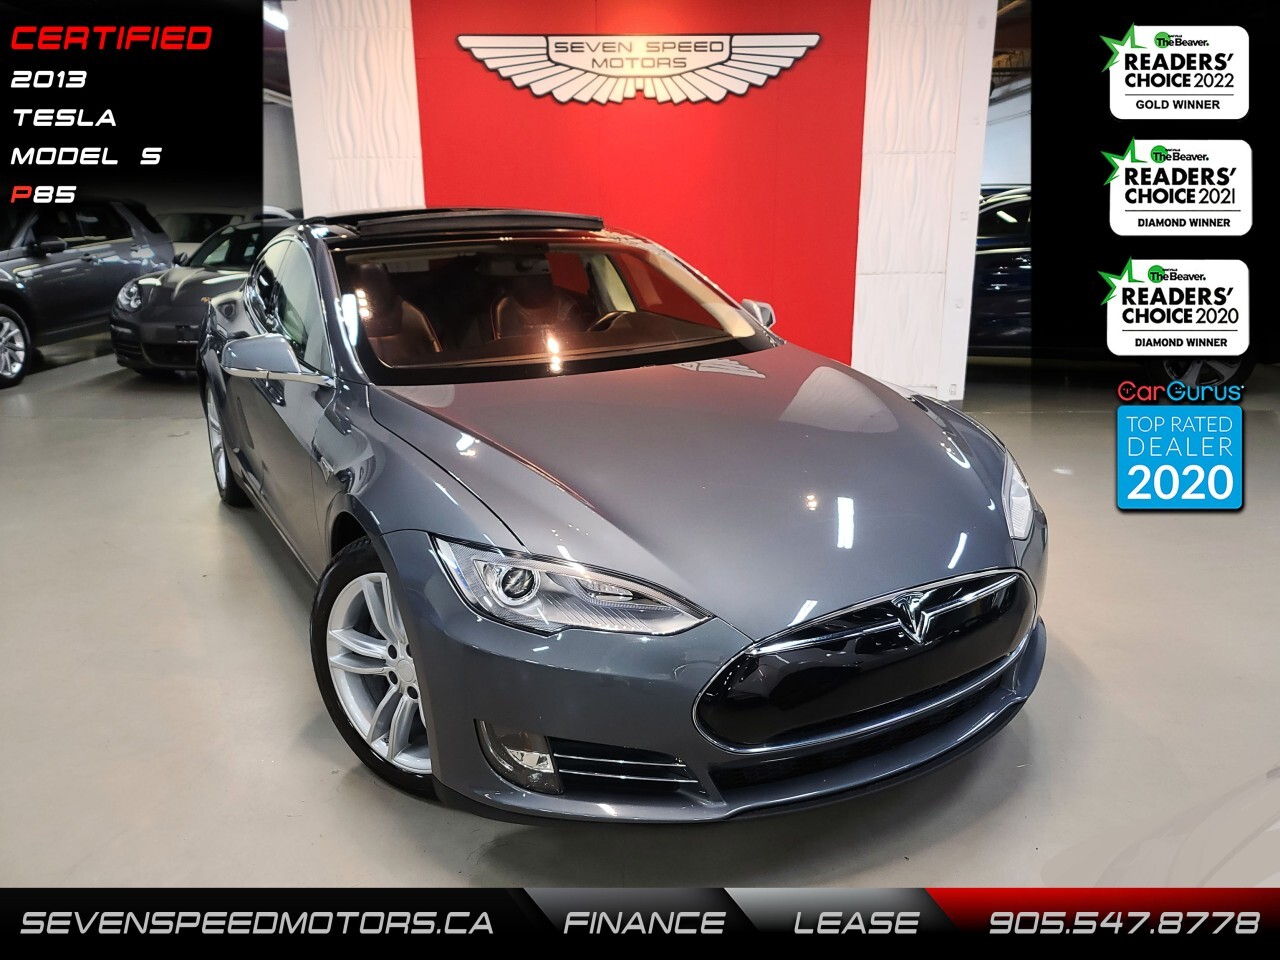 2013 Tesla Model S P85/7Pass/LowKMs/Certified